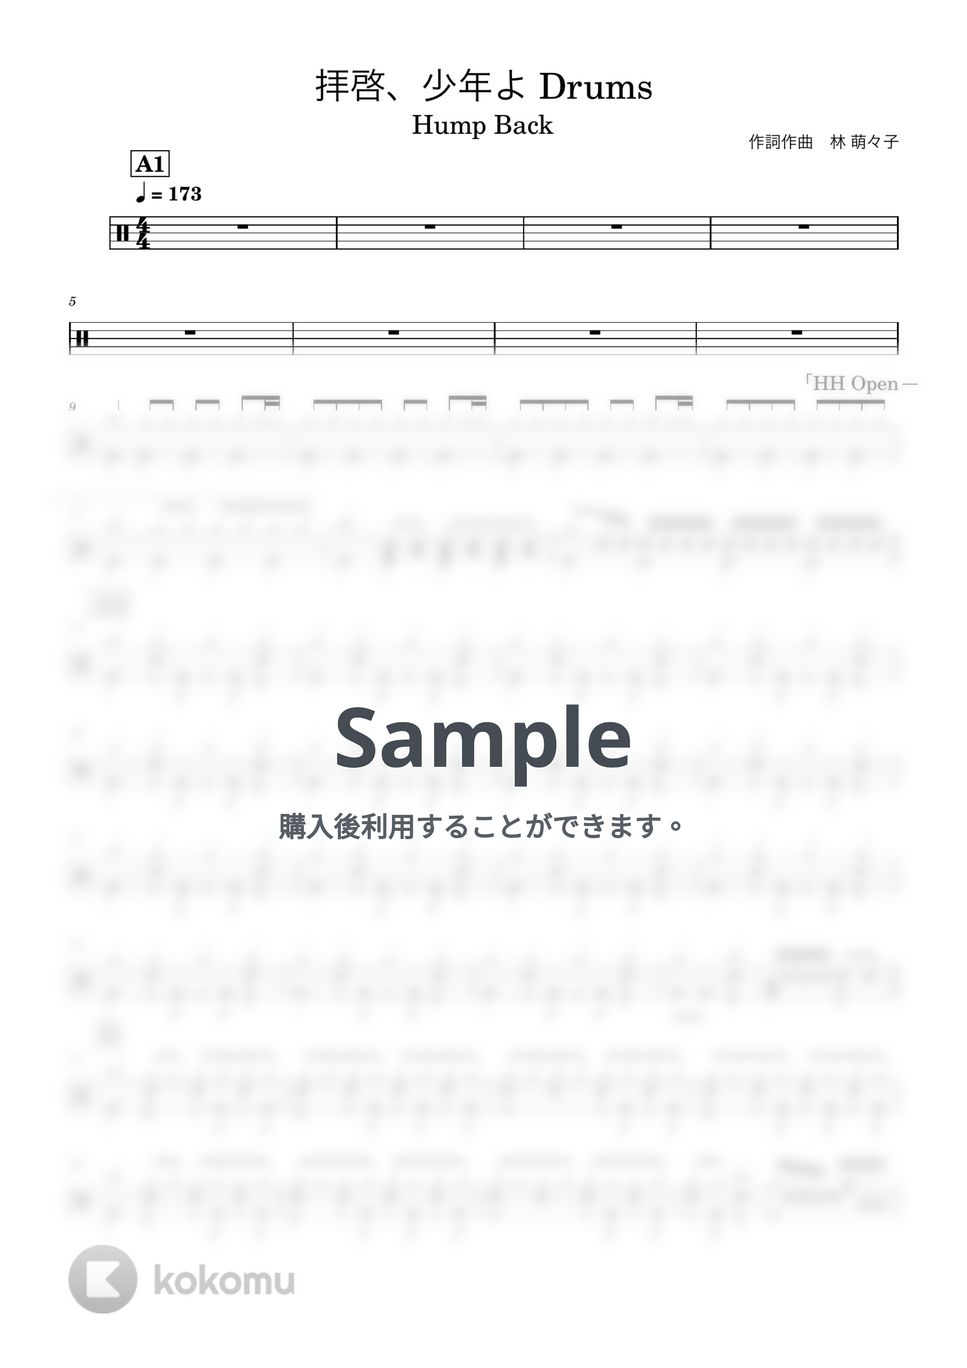 Hump Back - 背景、少年よ (日本テレビ系『バズリズム02』エンディングテーマ、ドラム譜) by Kodai Hojo